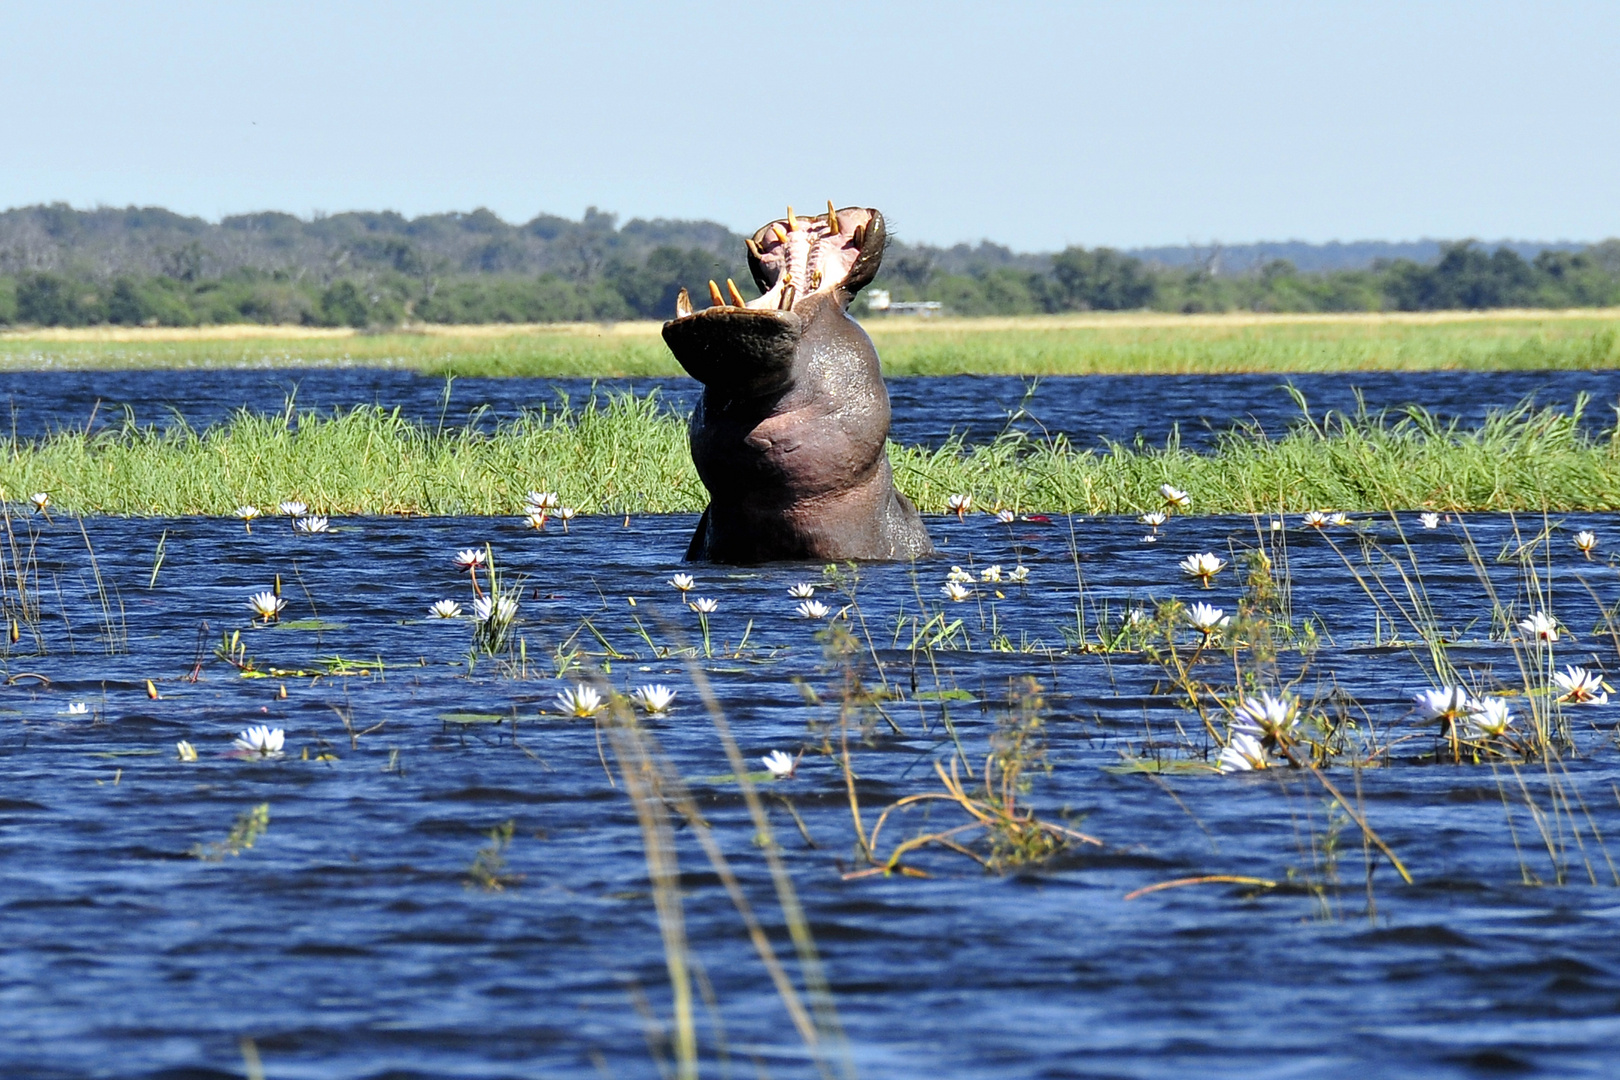 Achtung Hippo - Die Drohung gilt mir und meinem Fotoapparat!! - Zambezi-River (Botswana)